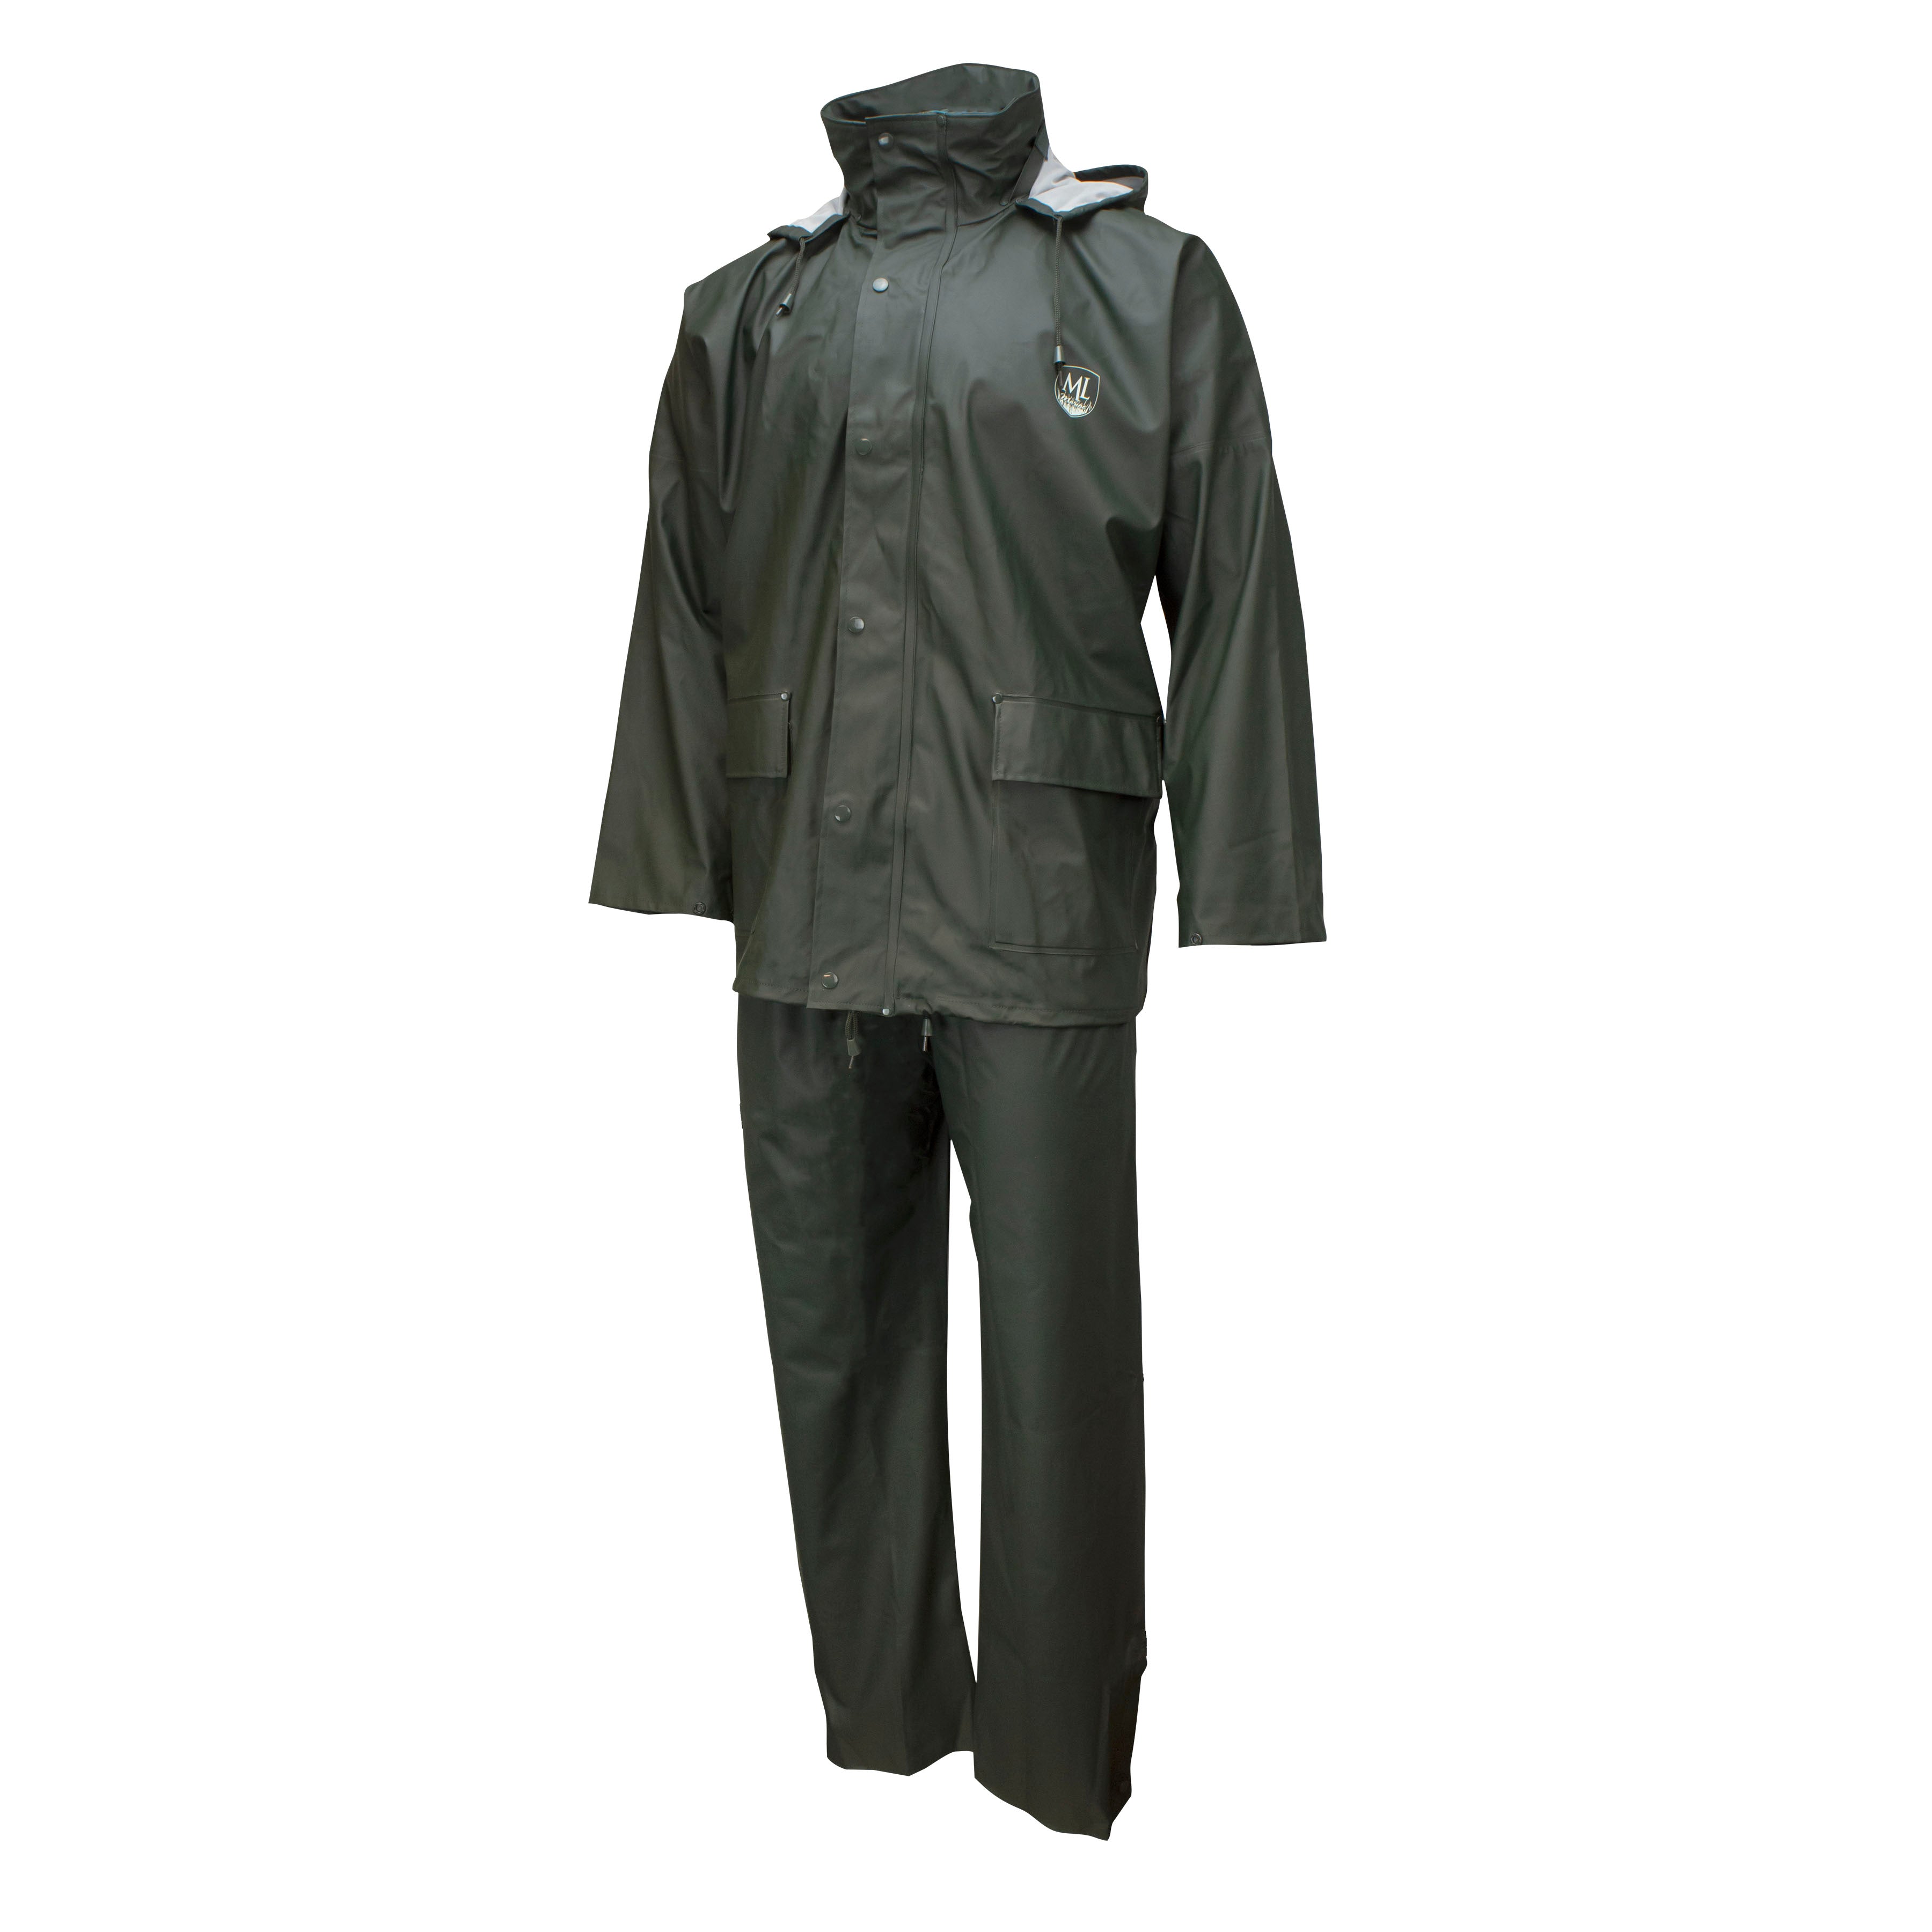 Neese MM30S Marshlander Marine Rain Suit